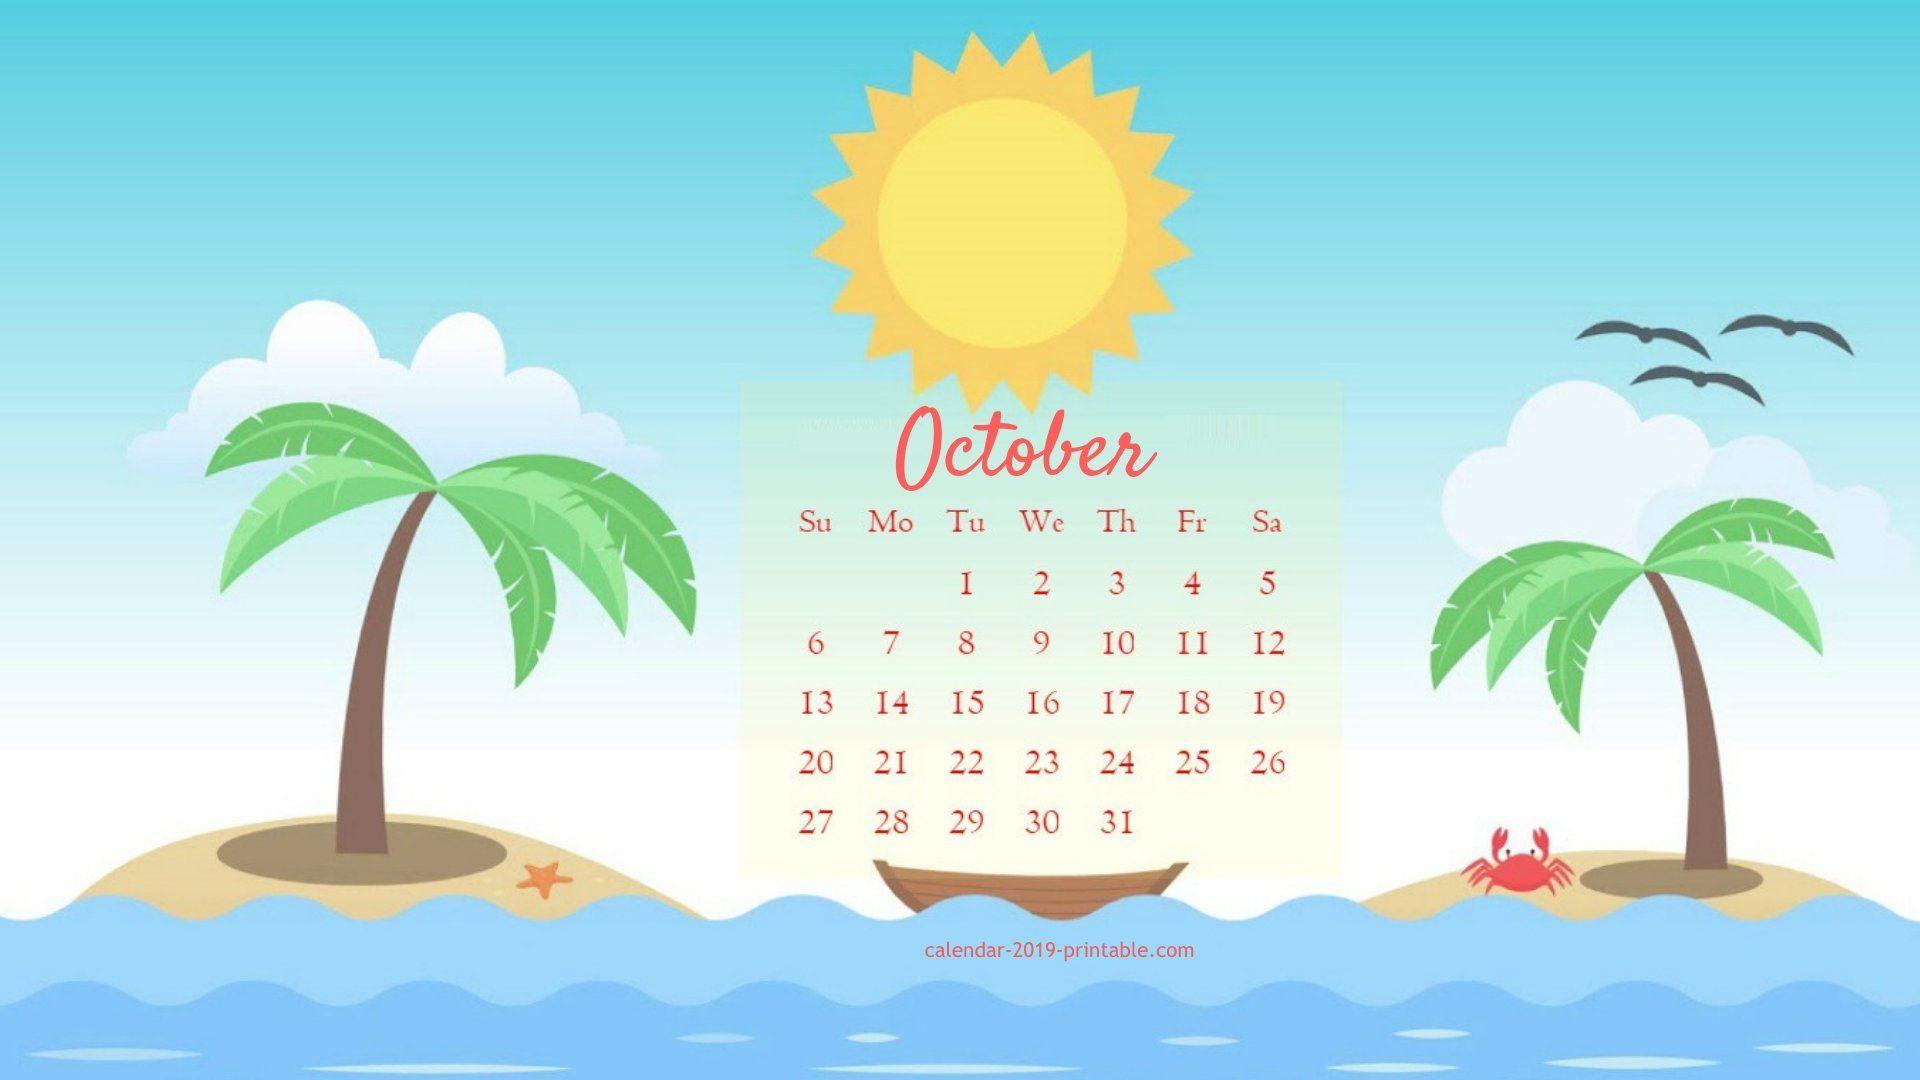 october 2019 cute calendar wallpapers